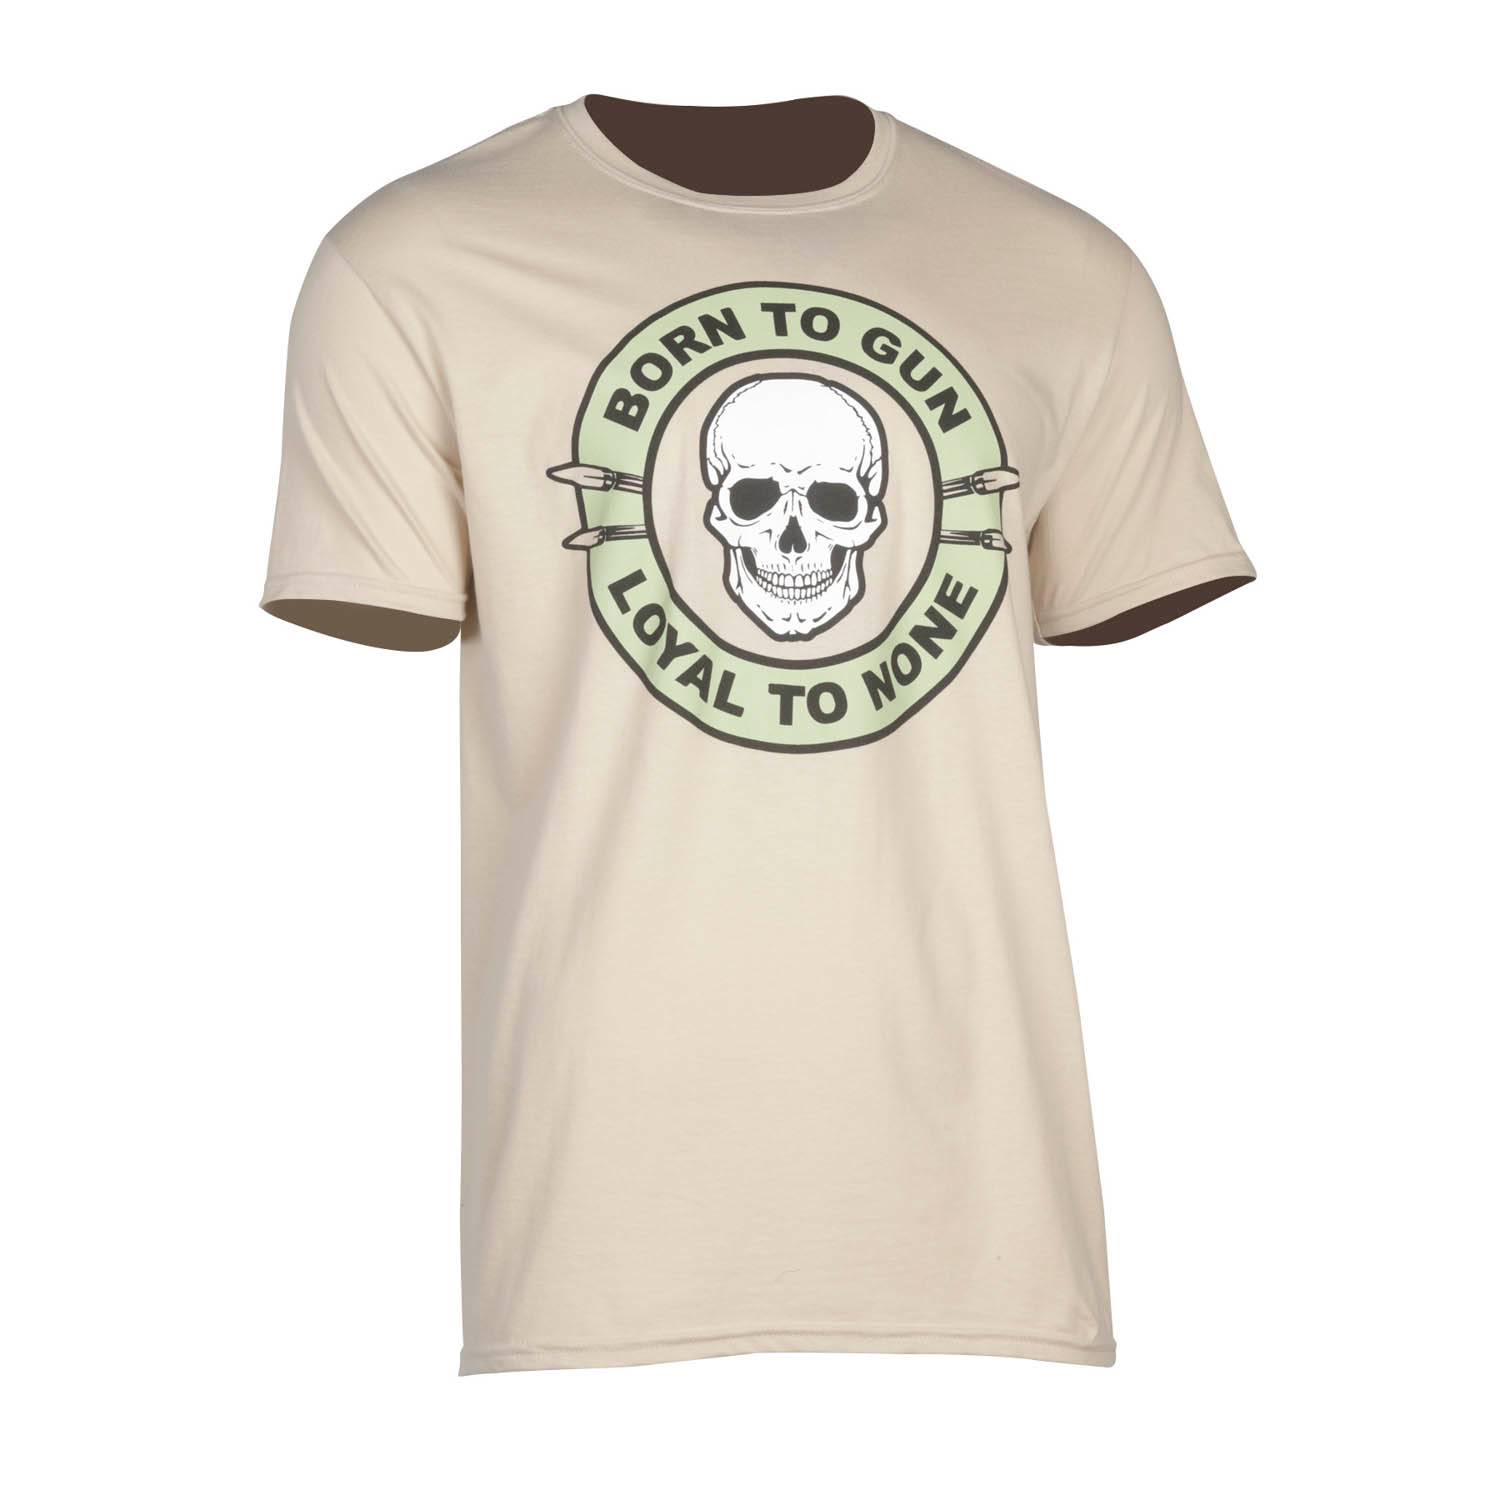 Galls "Born to Gun" Tan Graphic T-Shirt